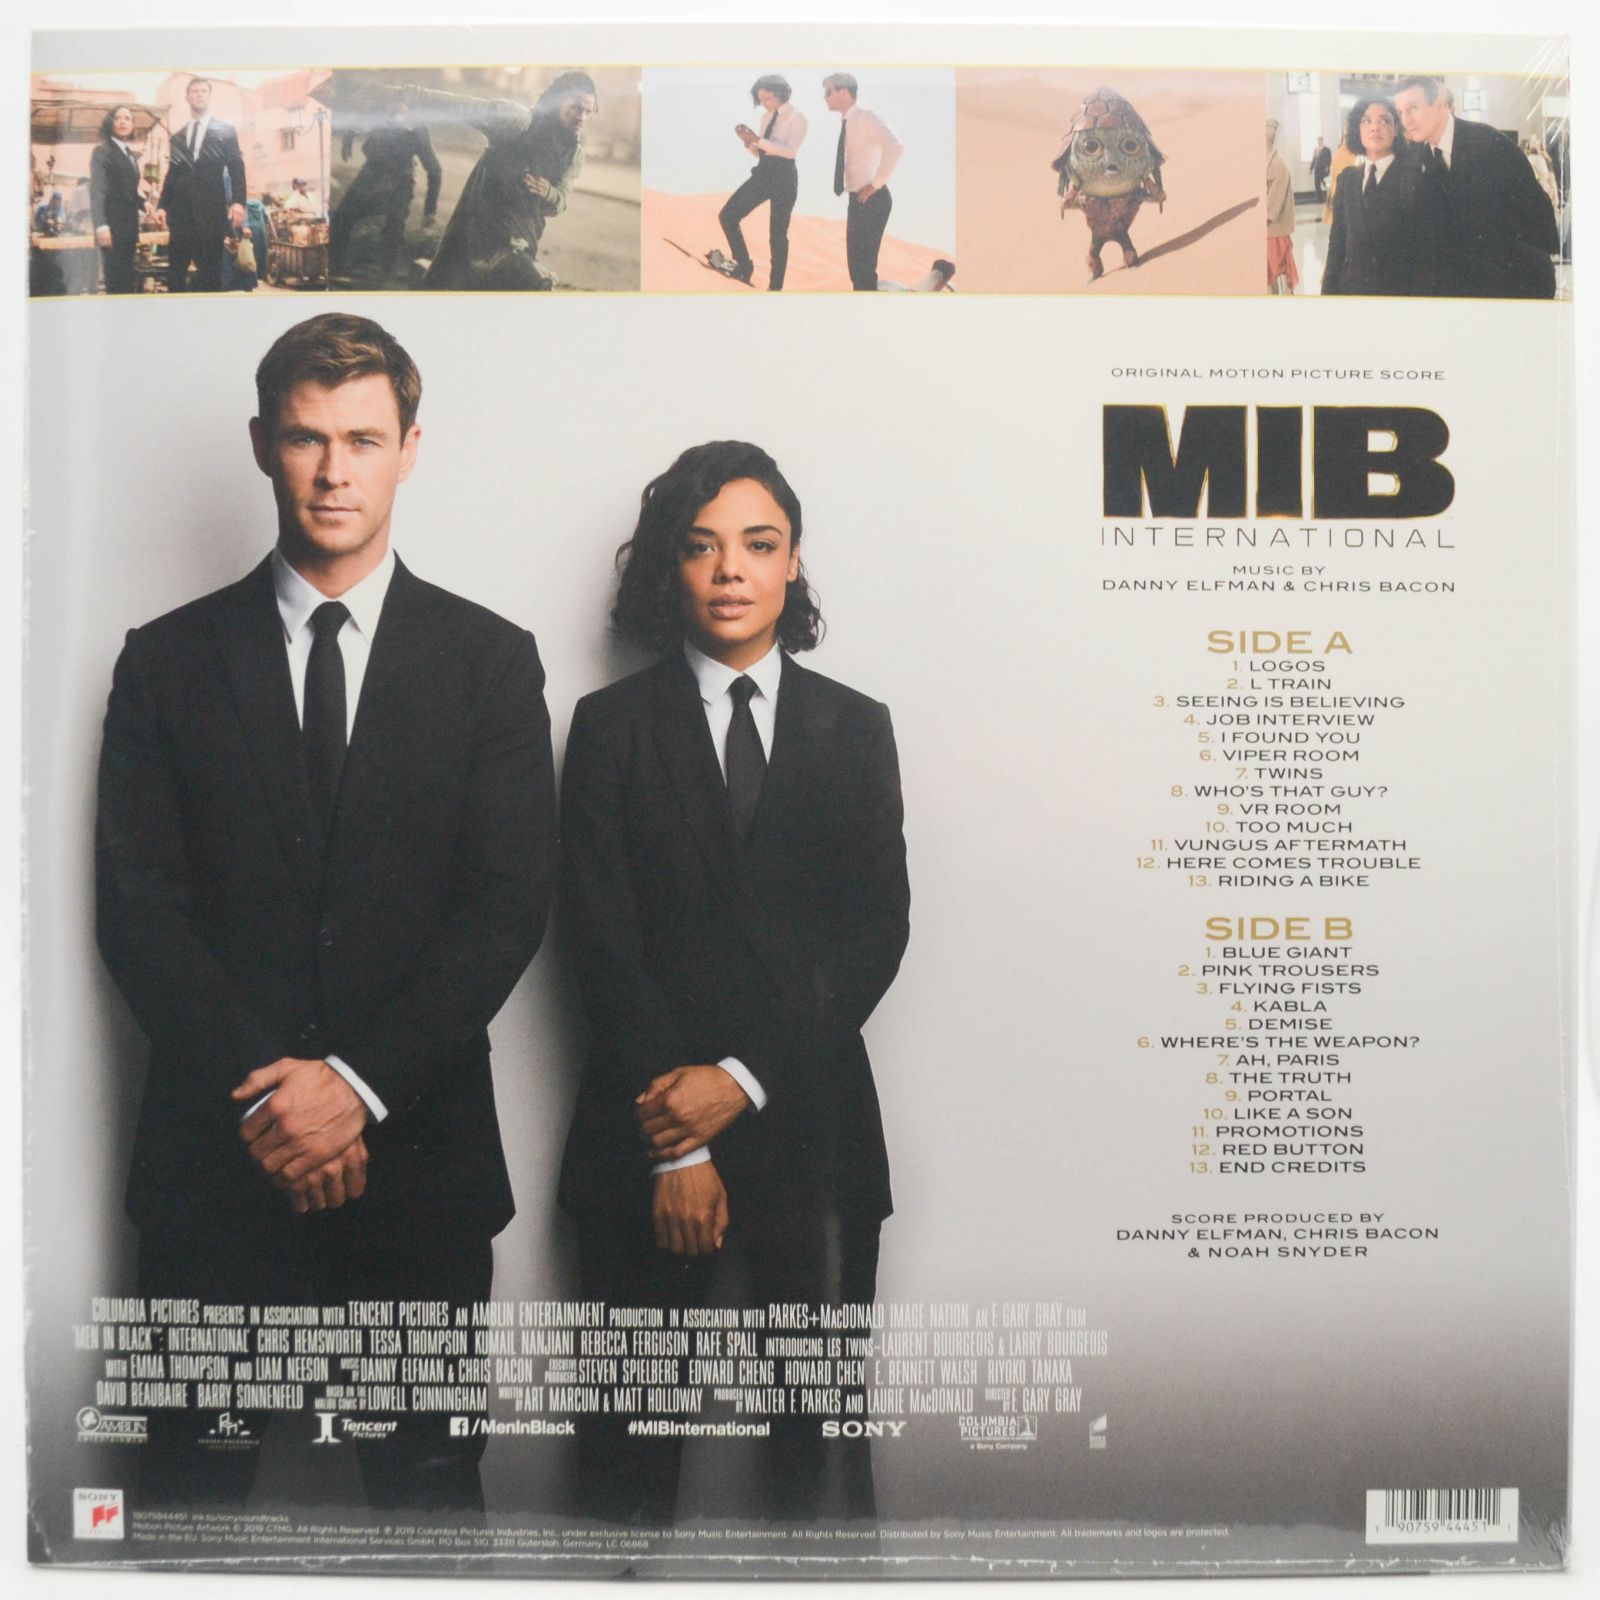 Danny Elfman & Chris Bacon — MIB International (Original Motion Picture Score), 2019